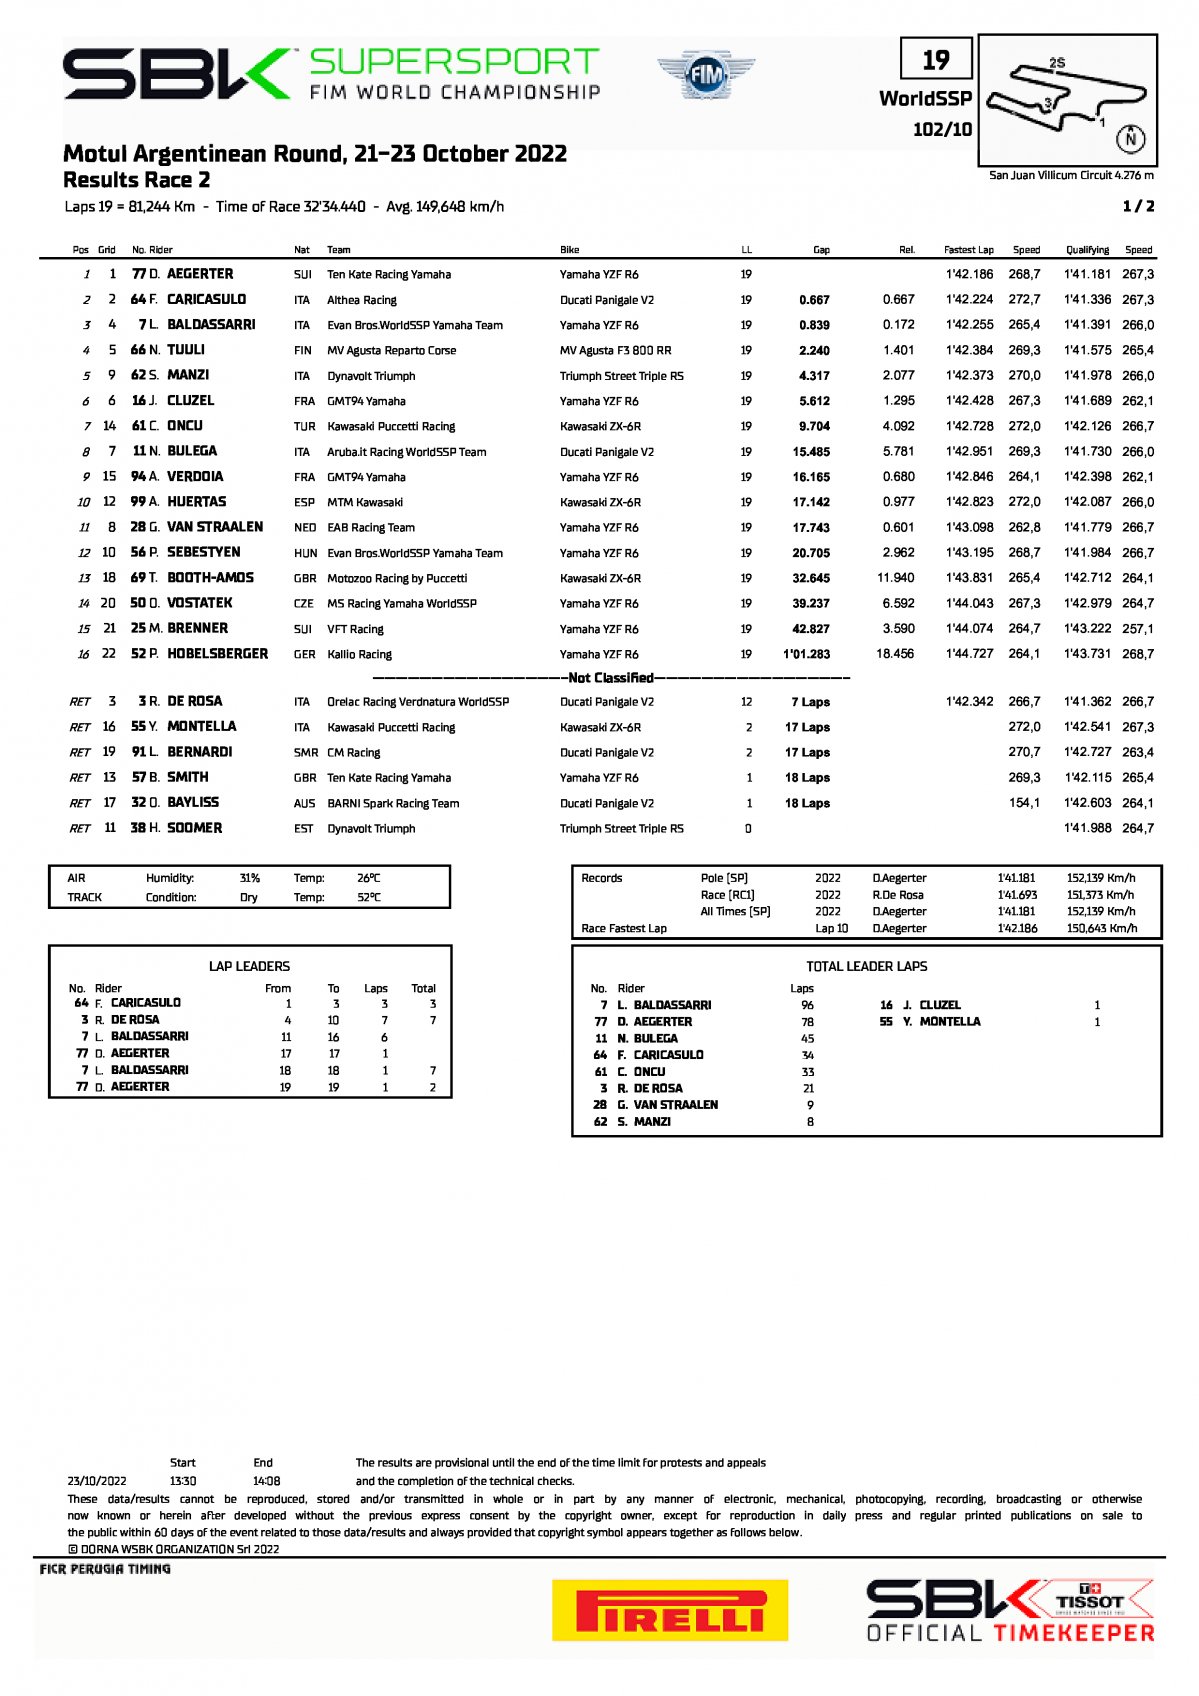 Результаты 2 гонки ARGWorldSBK, World Supersport (23/10/2022)